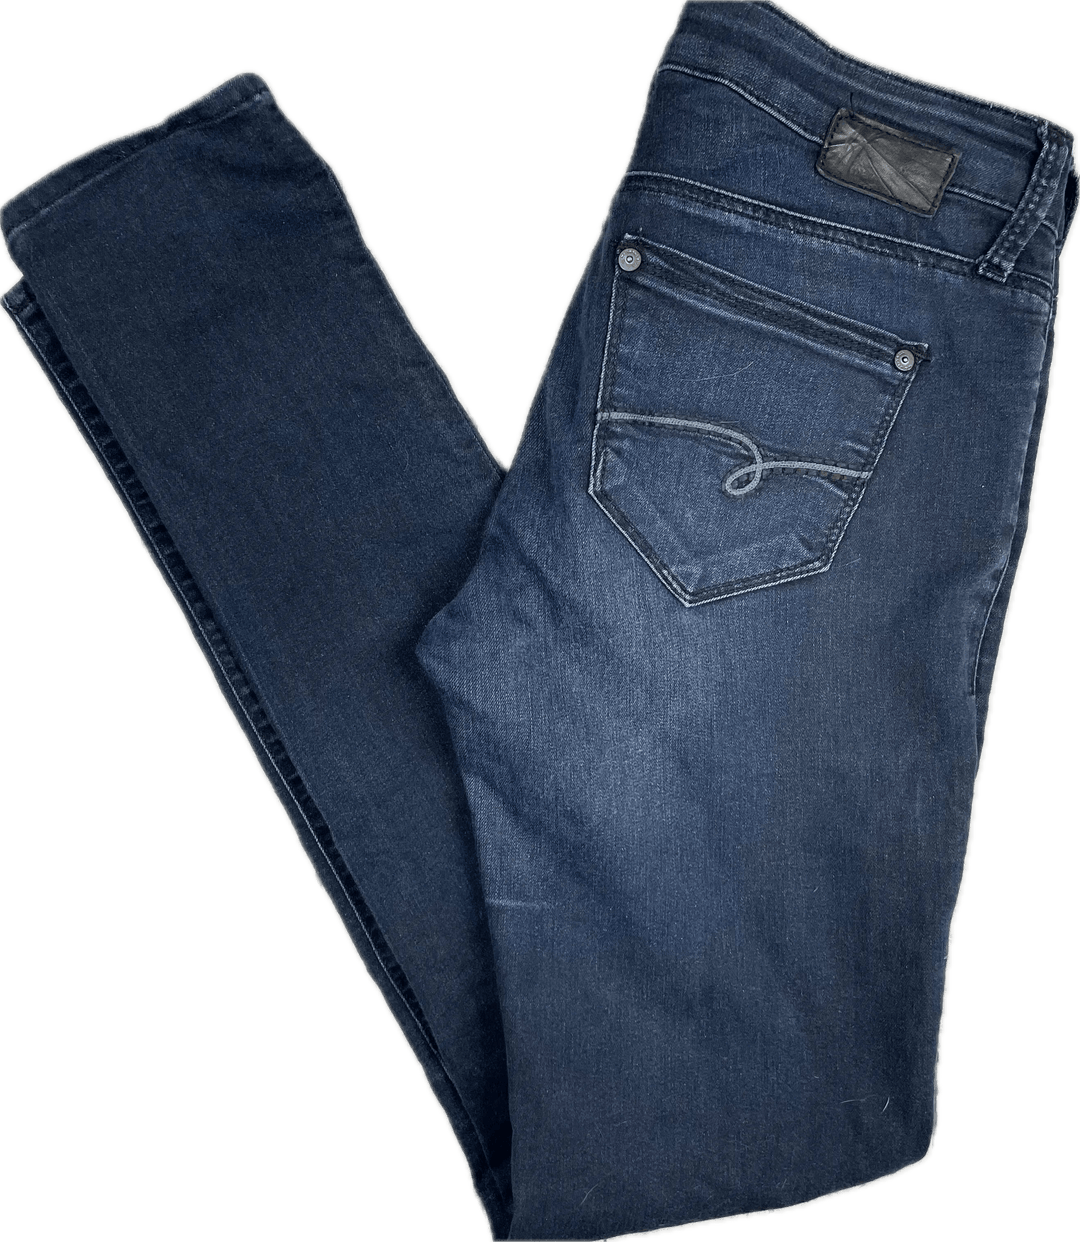 Mavi Jeans 'Alexa' Mid Rise Skinny Denim Jeans -Size 27 or 9AU - Jean Pool